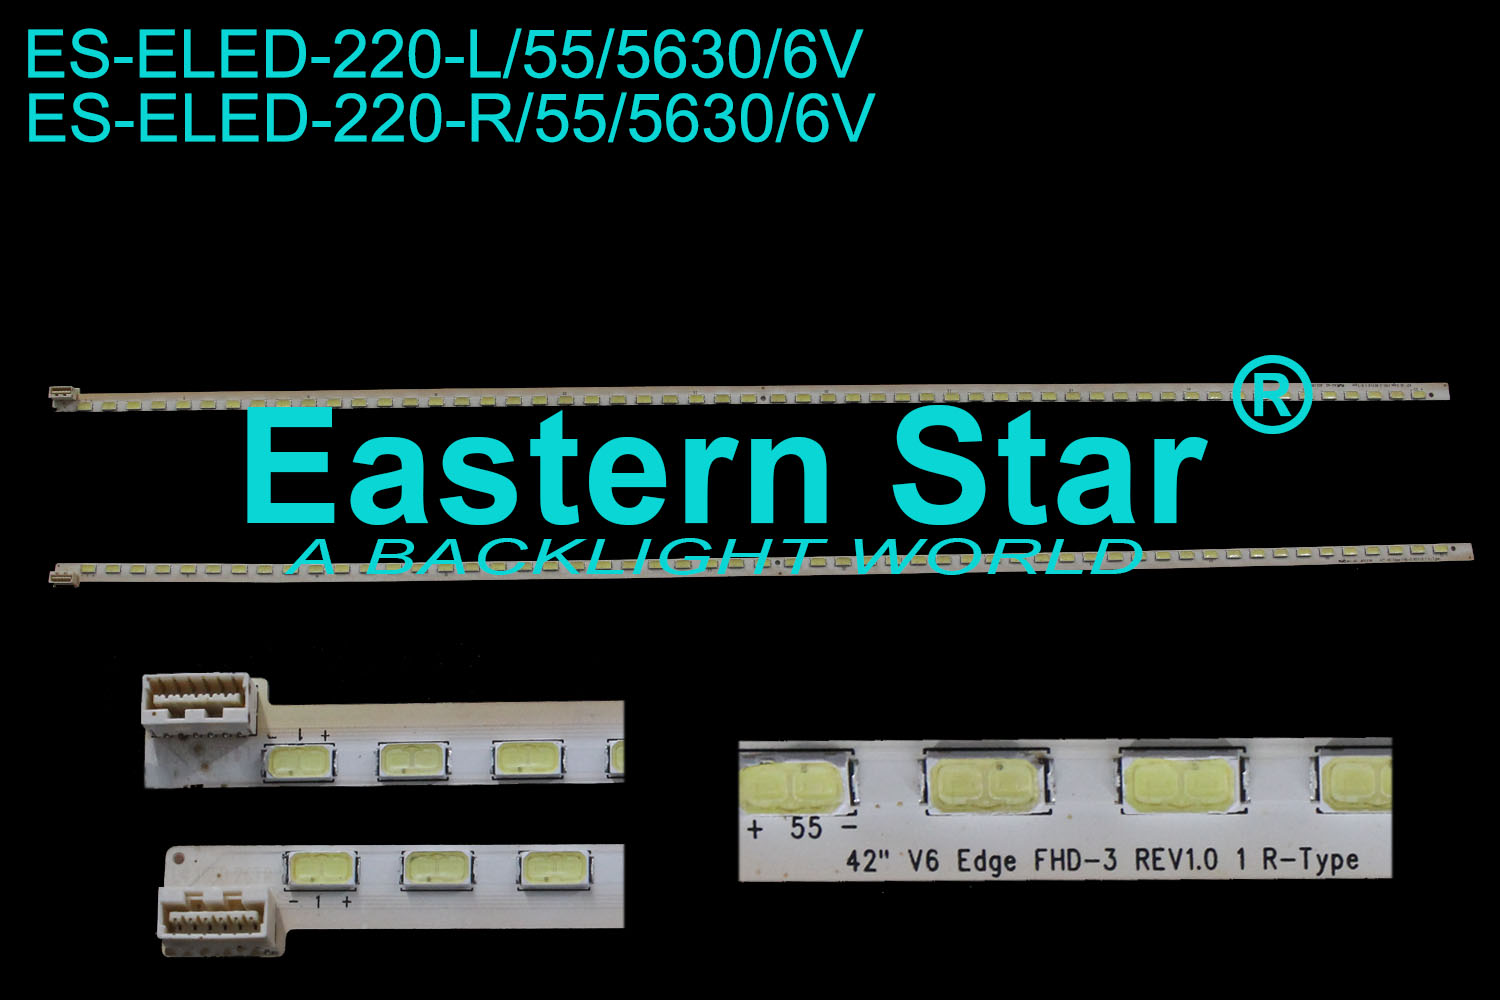 ES-ELED-220 ELED/EDGE TV backlight use for Lg 42'' 55LEDs 42'' V6 Edge FHD-3 REV1.0 1 L/R-Type LED STRIPS(2)